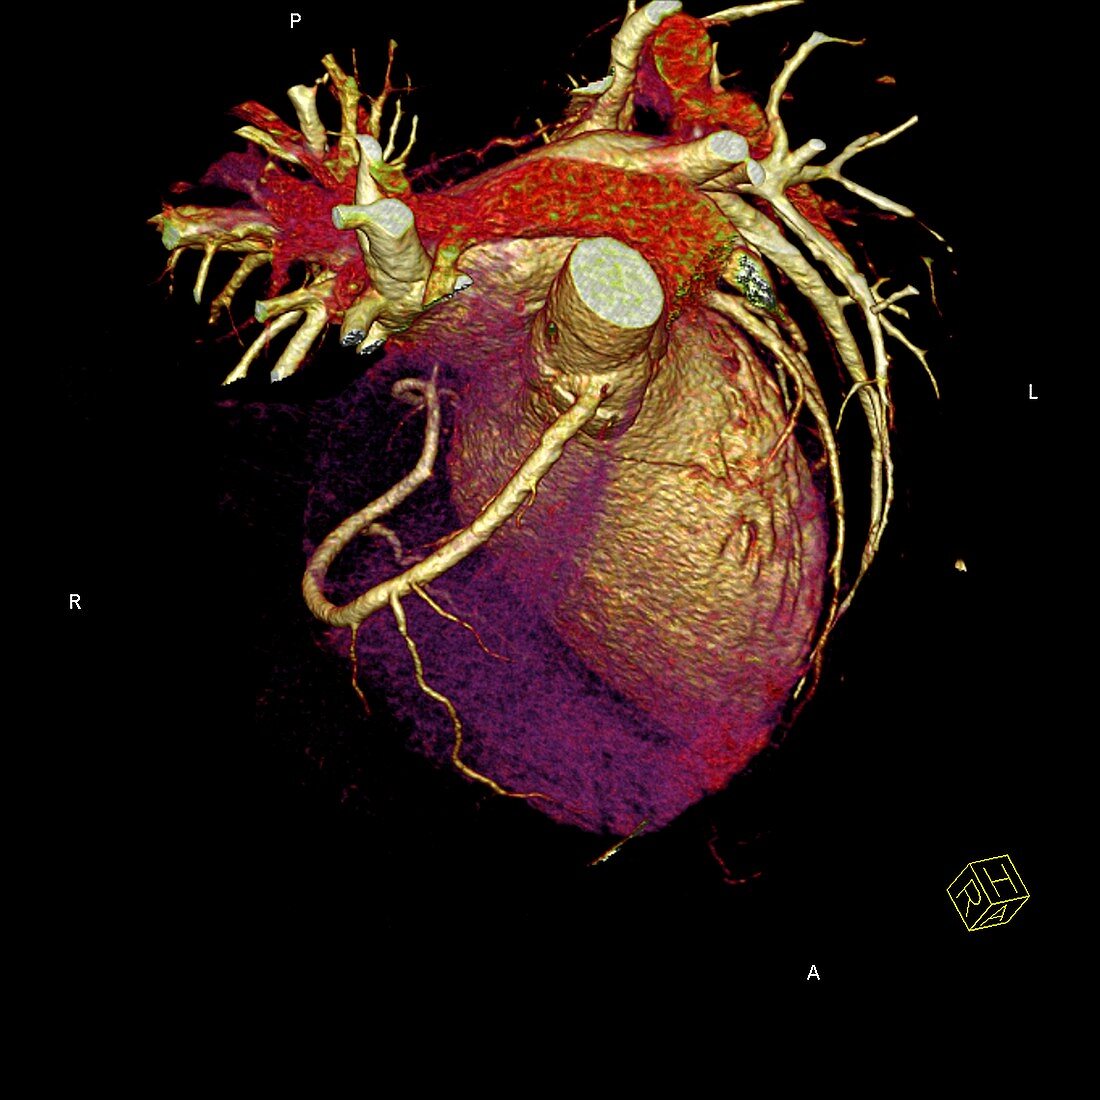 Human heart,CT scan